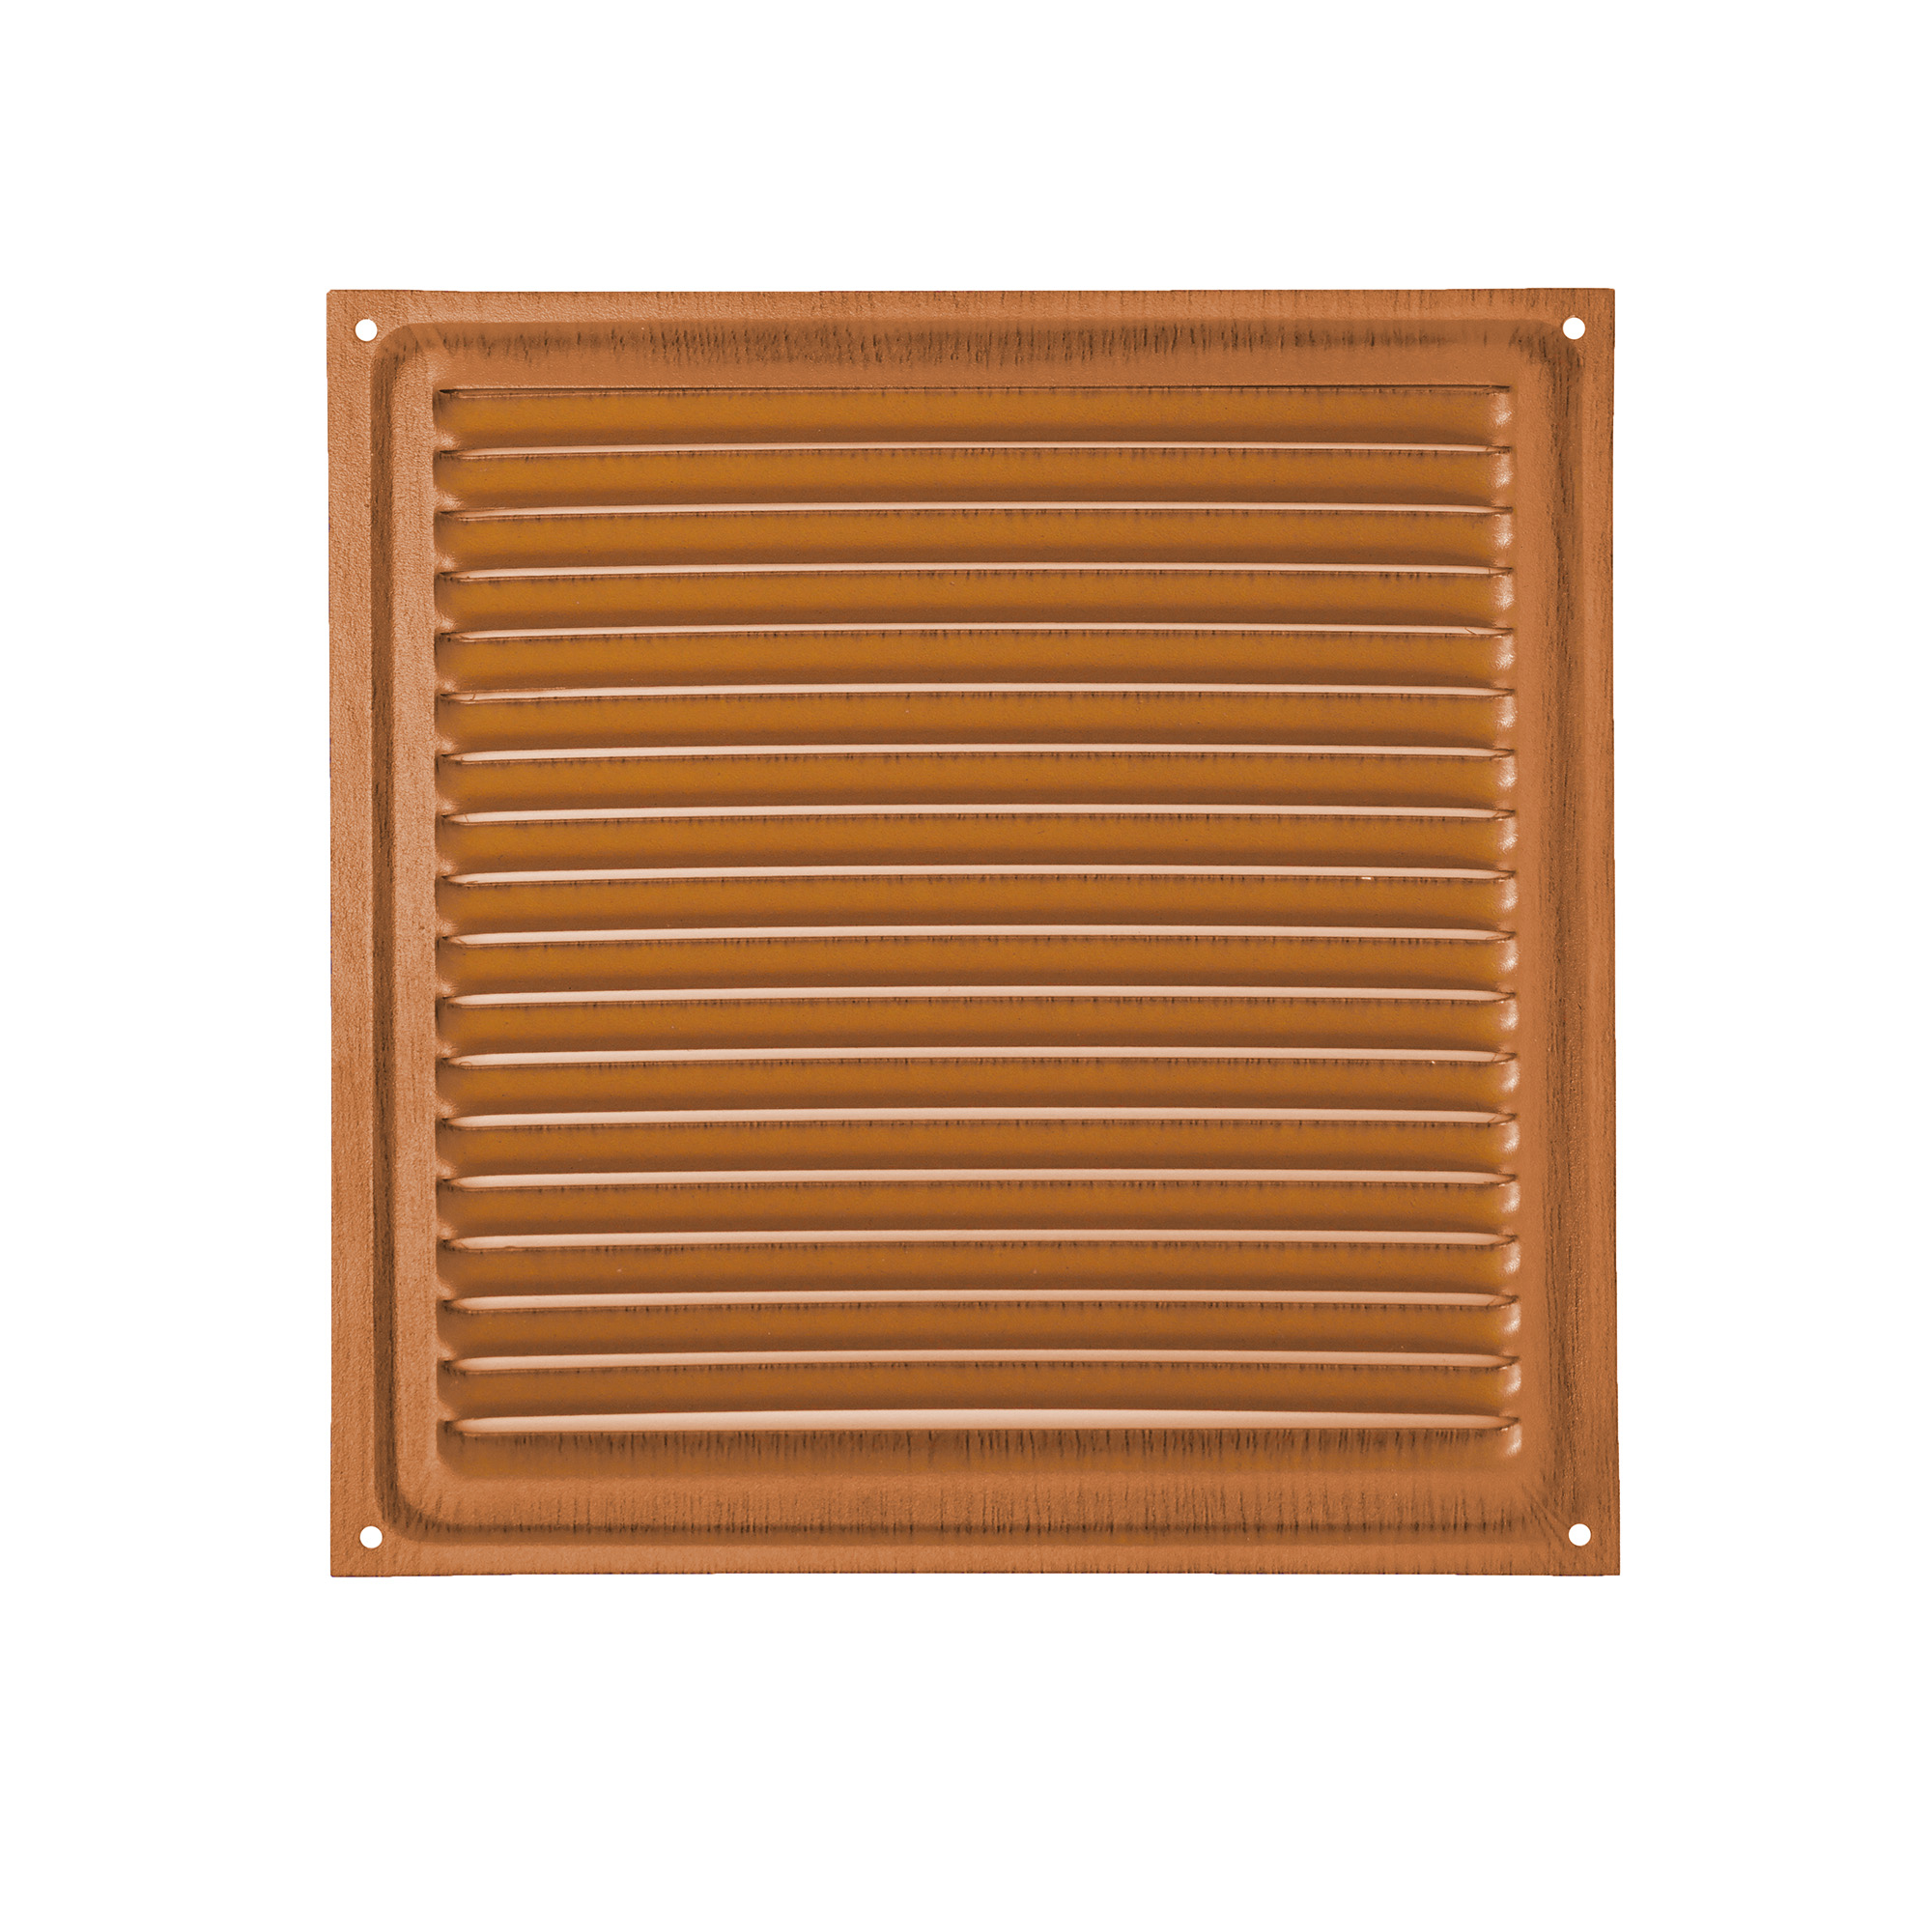 Решетка вентиляционная Трибатрон Черешня 150x150 мм решетка вентиляционная equation 150x150 мм пластик цвет коричневый